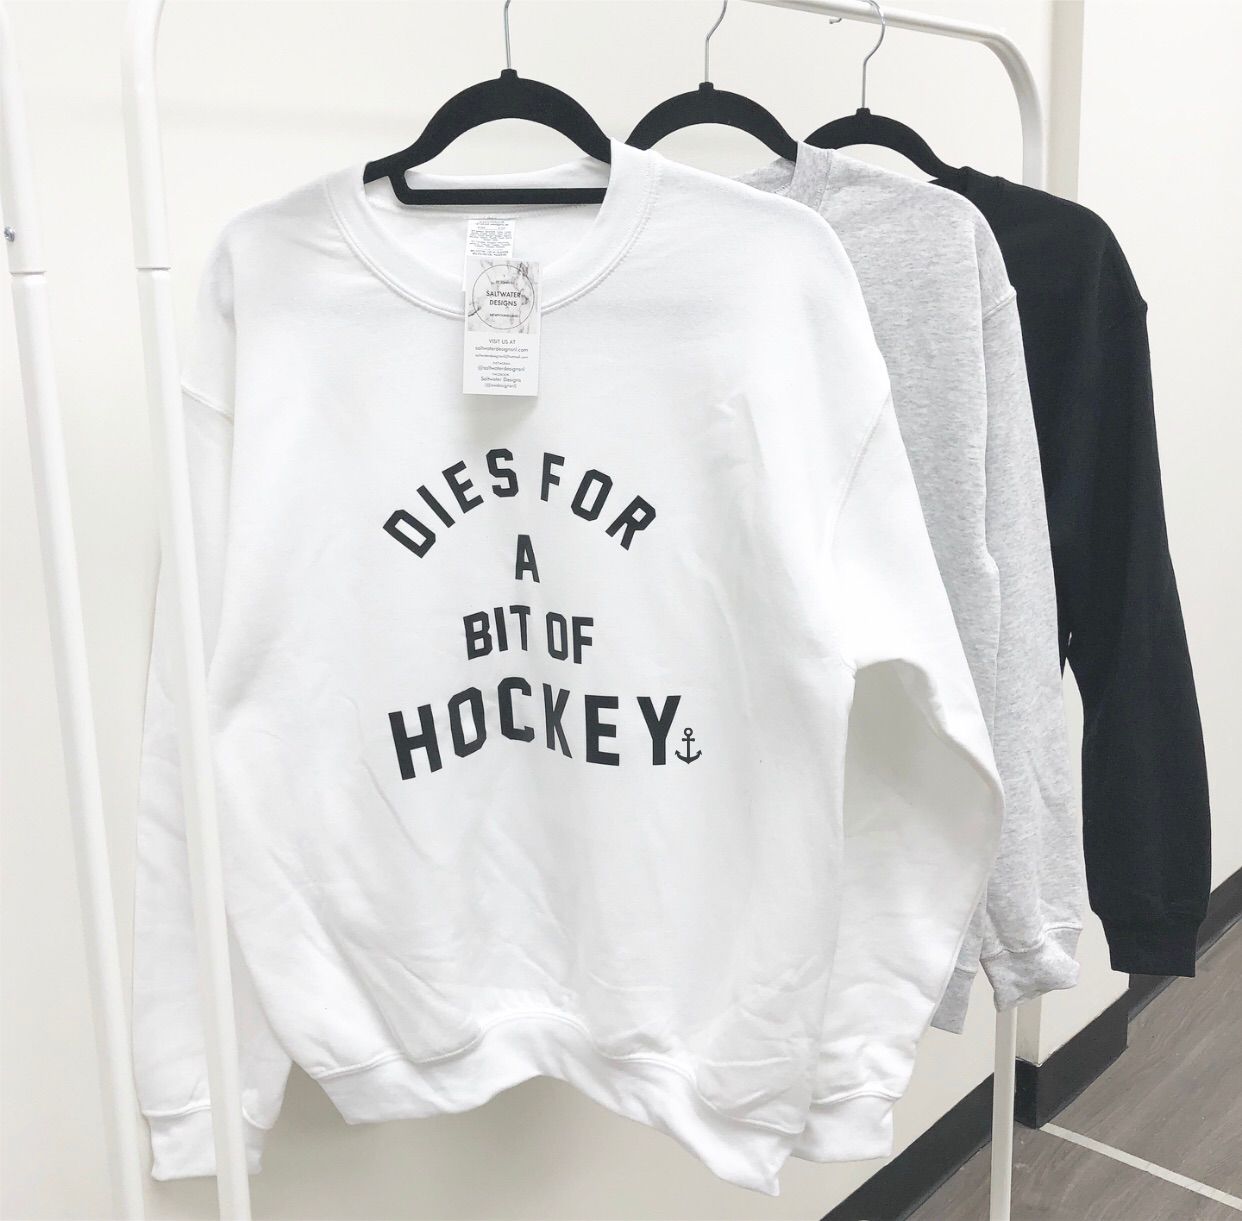 "Dies For A Bit Of Hockey” Unisex Crewneck Sweatshirt